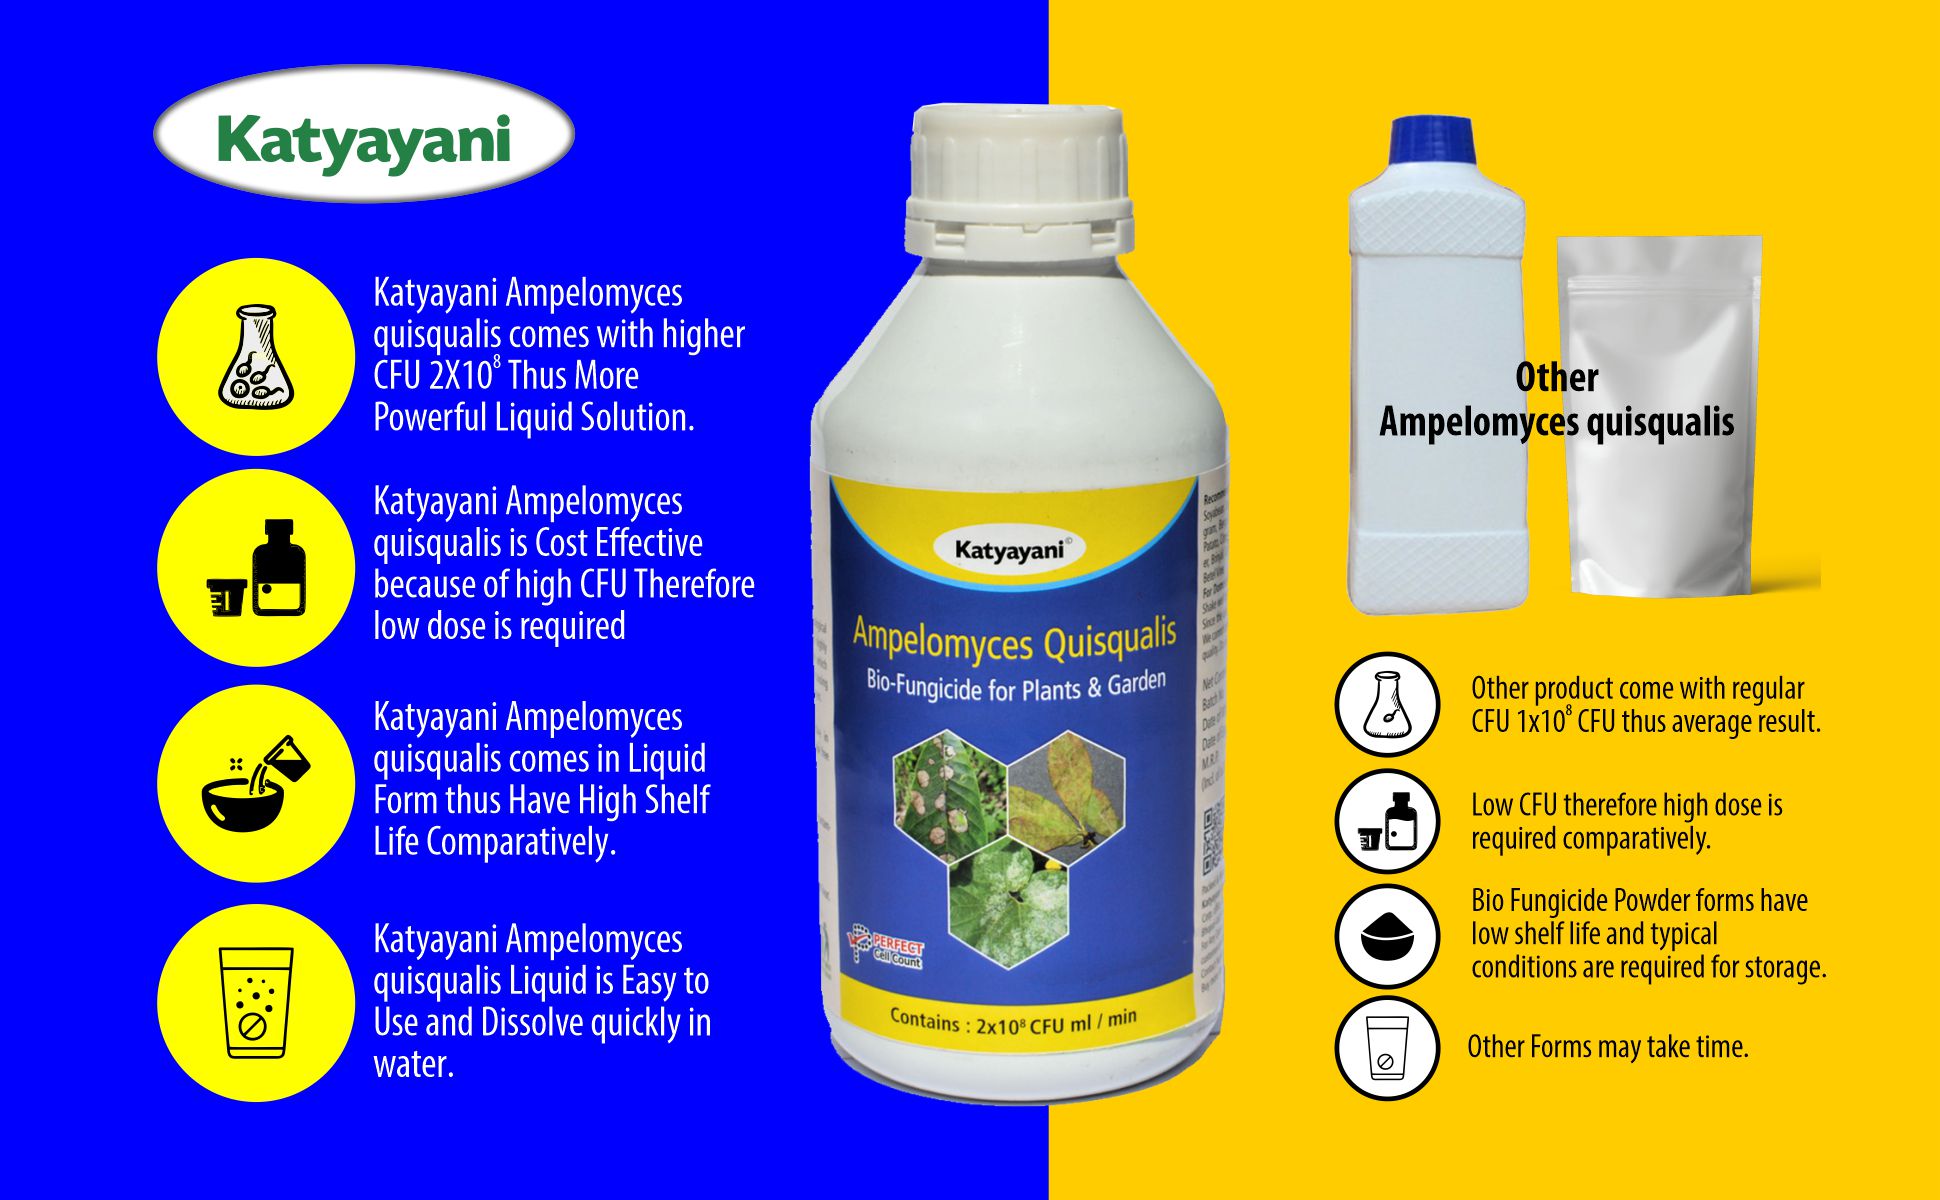 Katyayani Ampelomyces quisqualis Bio fungicide